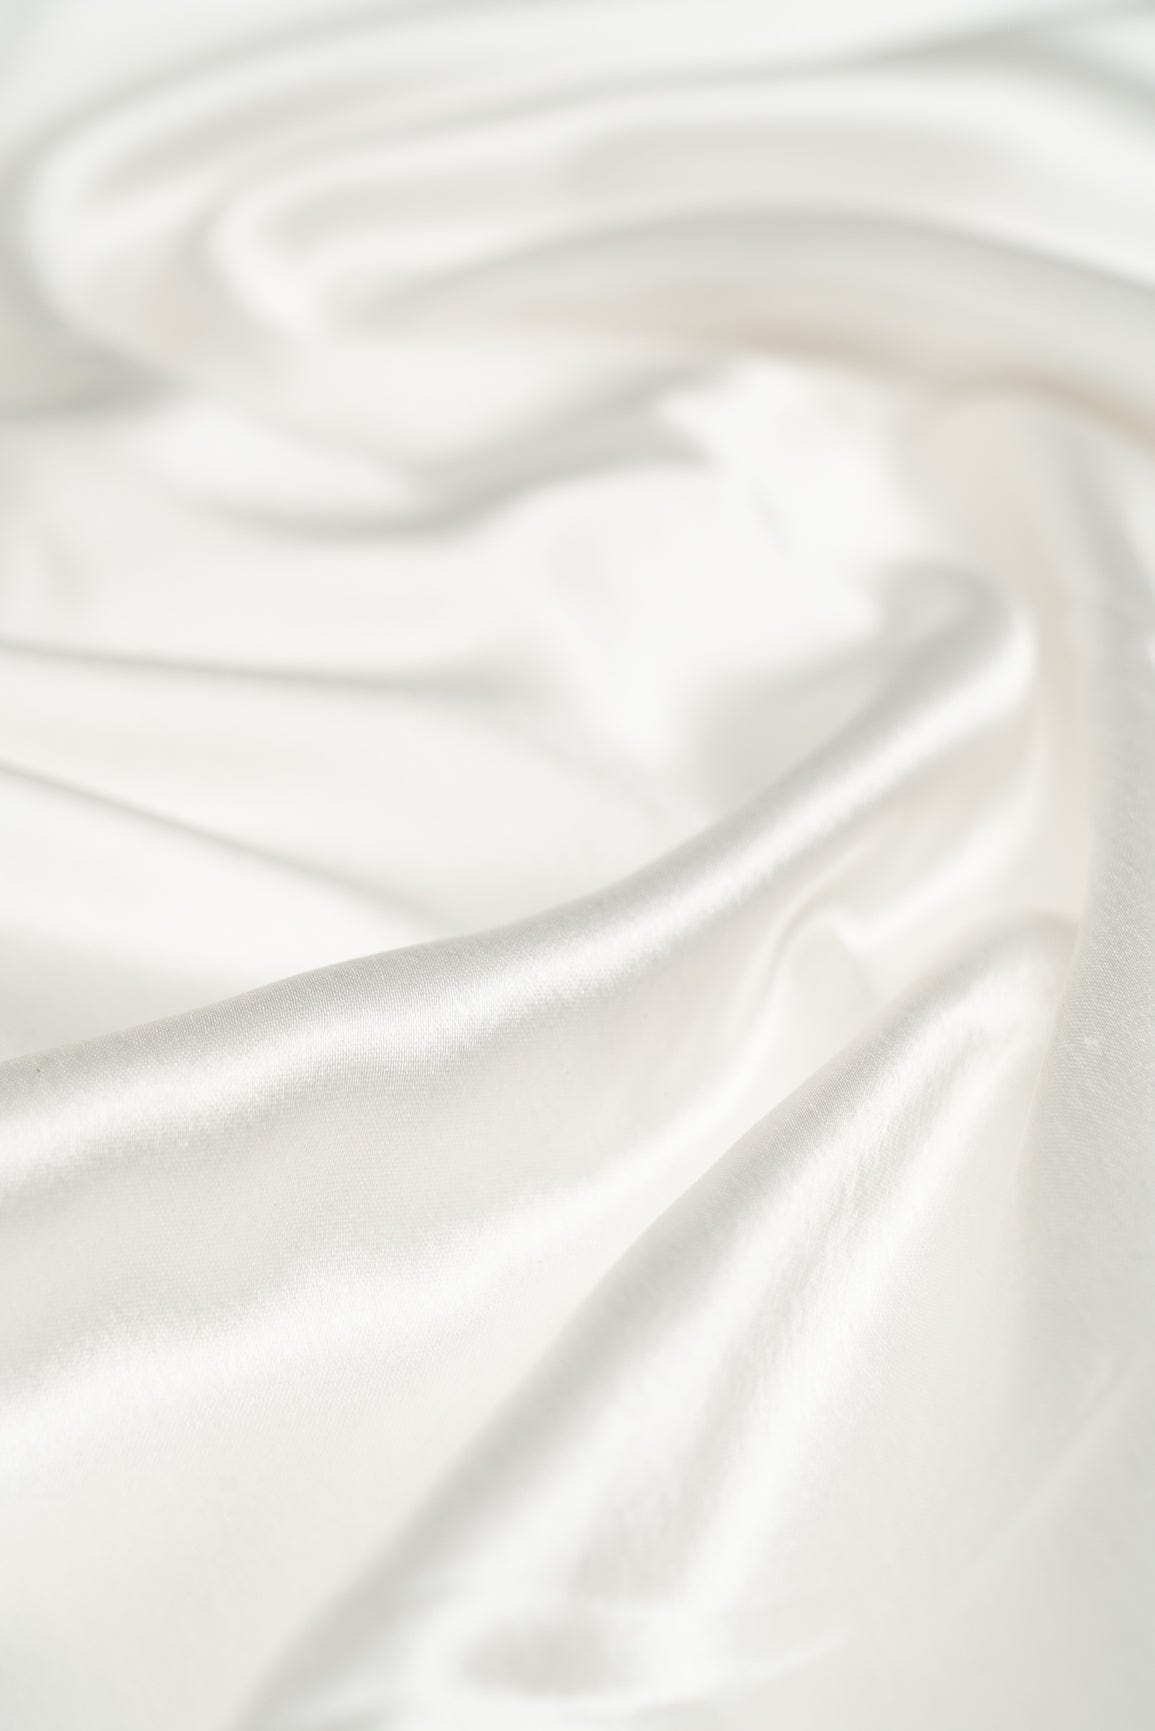 doeraa Plain Fabrics White Dyed Satin